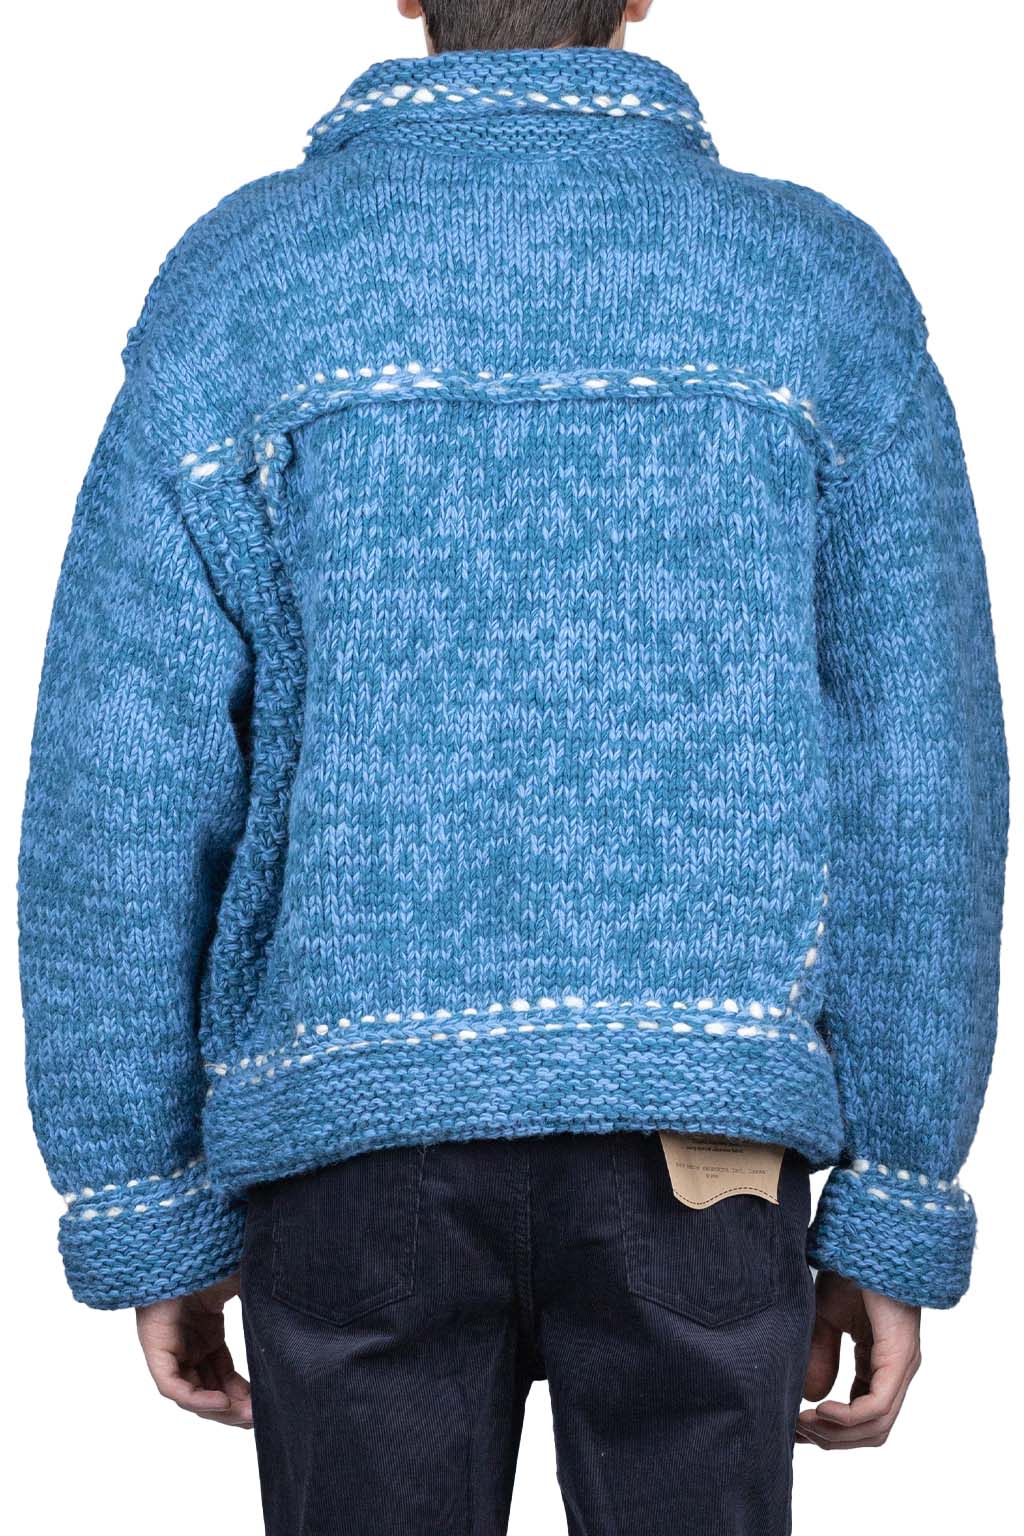 Kapital Wool Hand Knit G-Jacket Cowichan